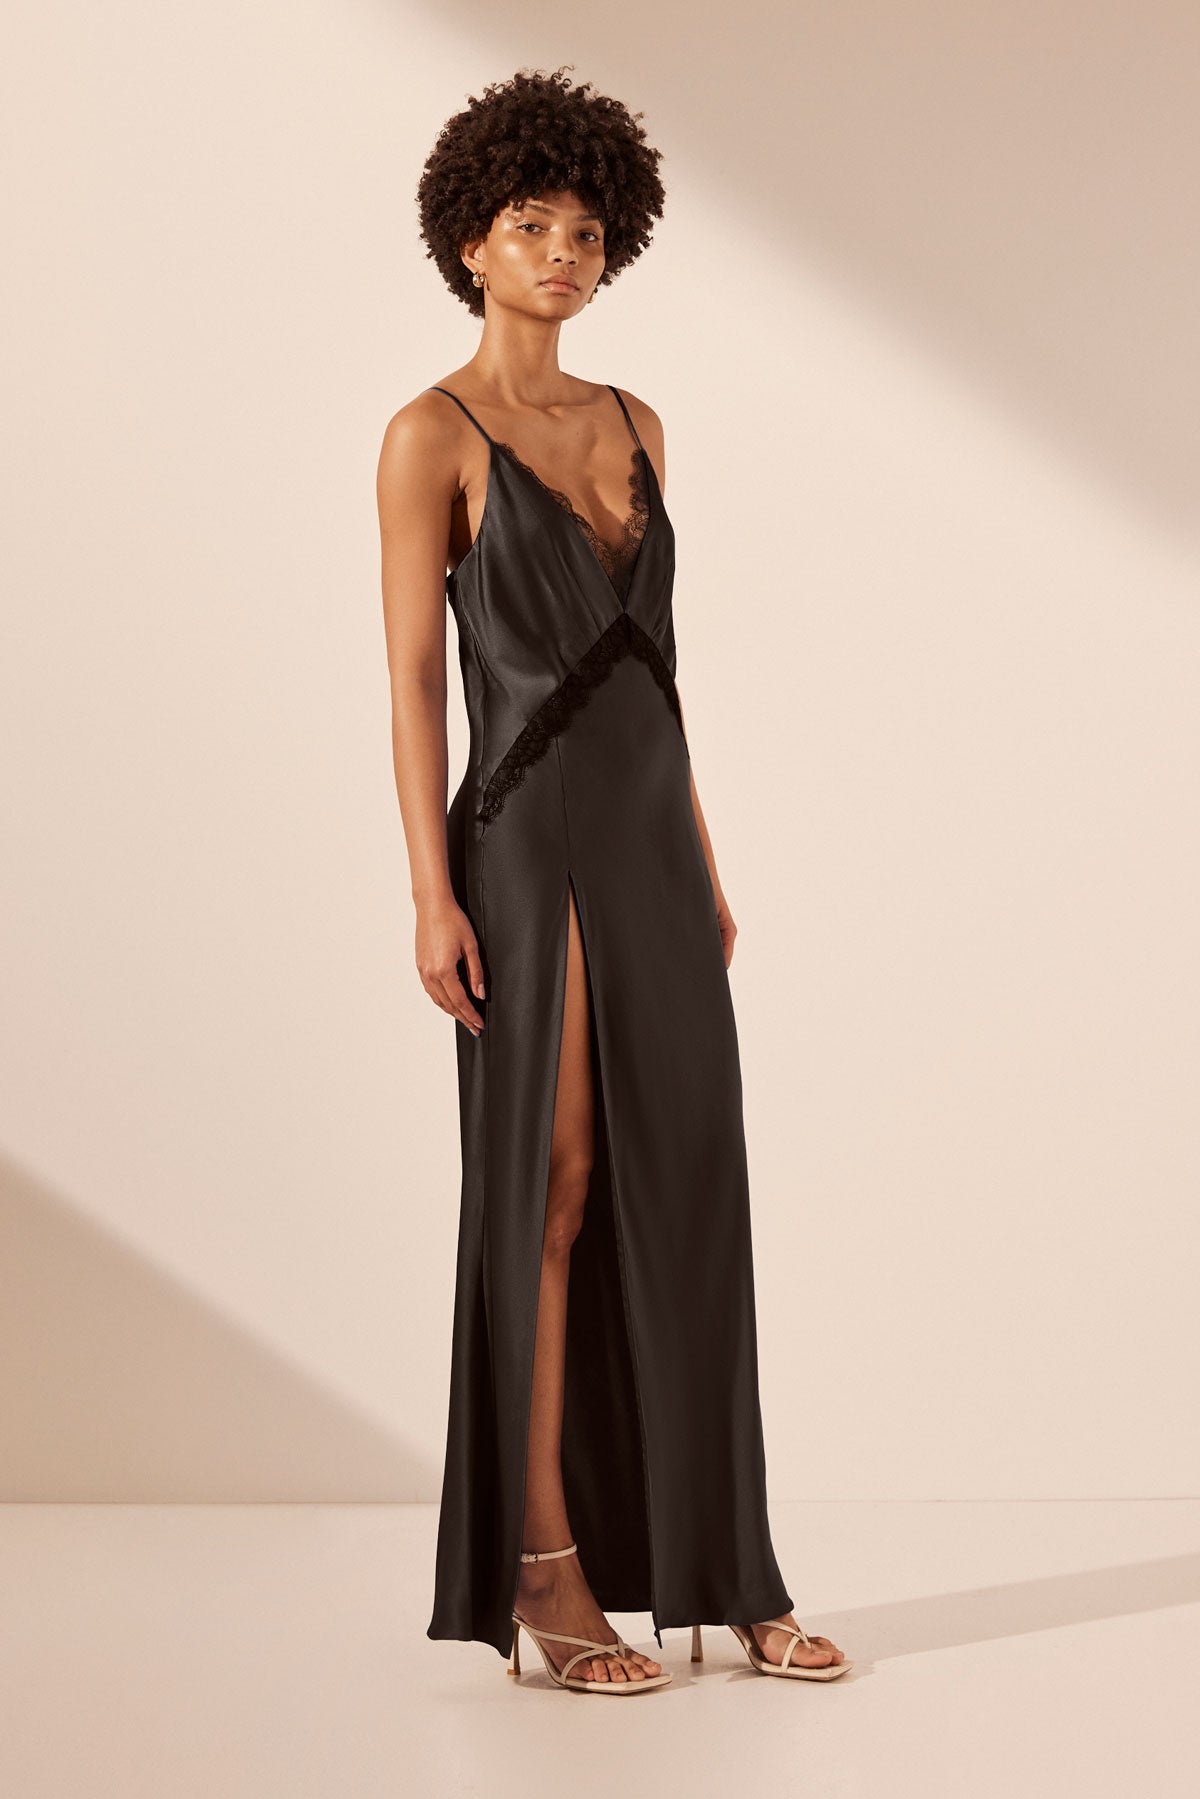 Black Satin Floor Length Prom Dress, Simple Black Short Sleeve Evening